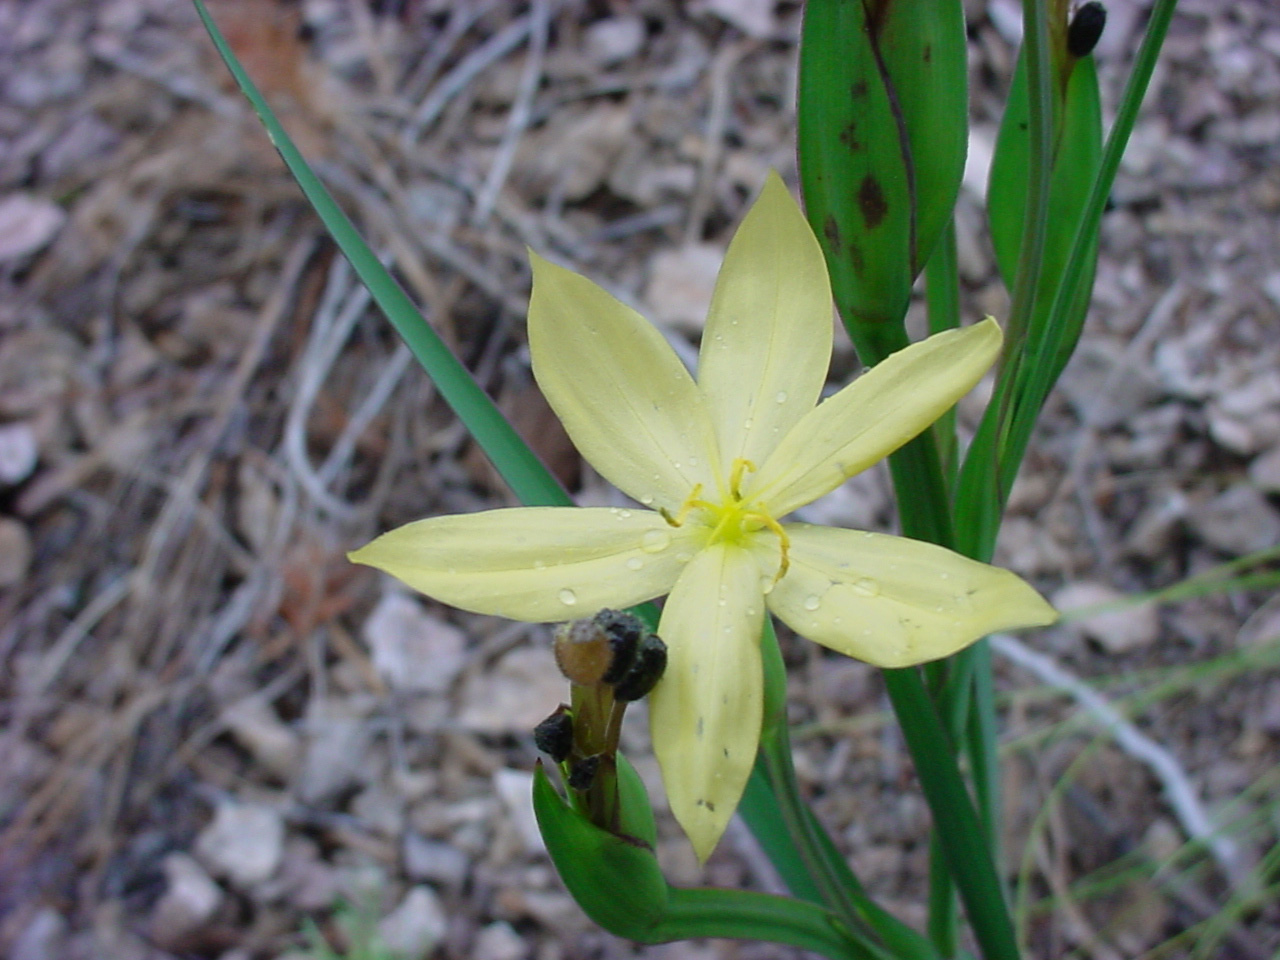 Sisyrinchium arizonicum, showing yellow flower and the bladelike leaves